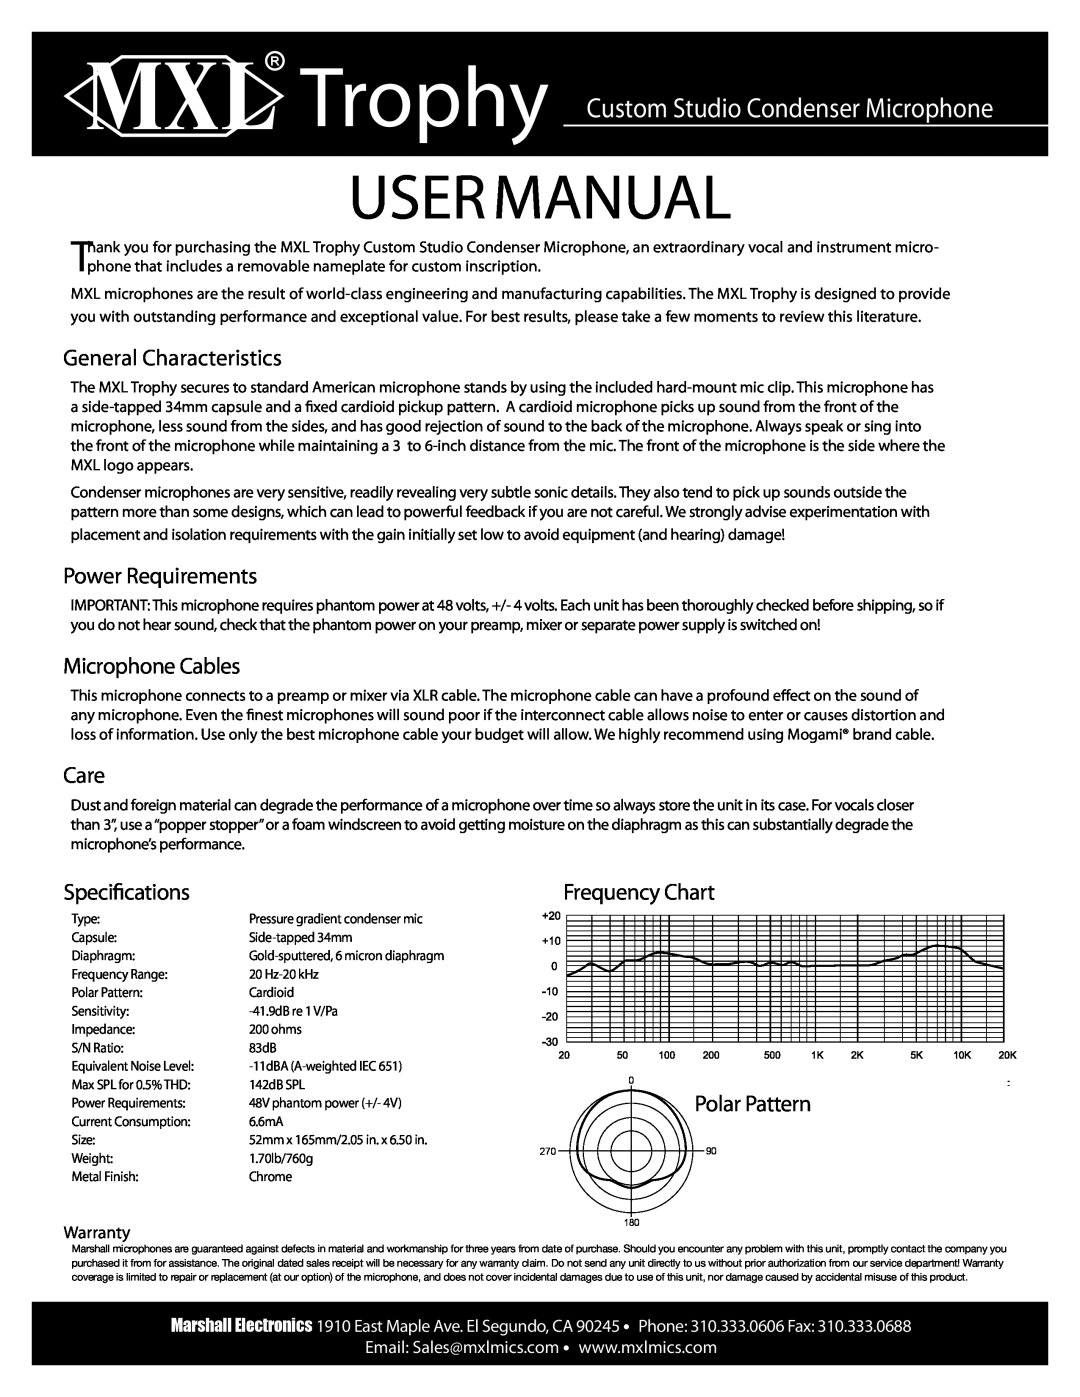 Marshall electronic MXL warranty User Manual, R Trophy Custom Studio Condenser Microphone, General Characteristics, Care 